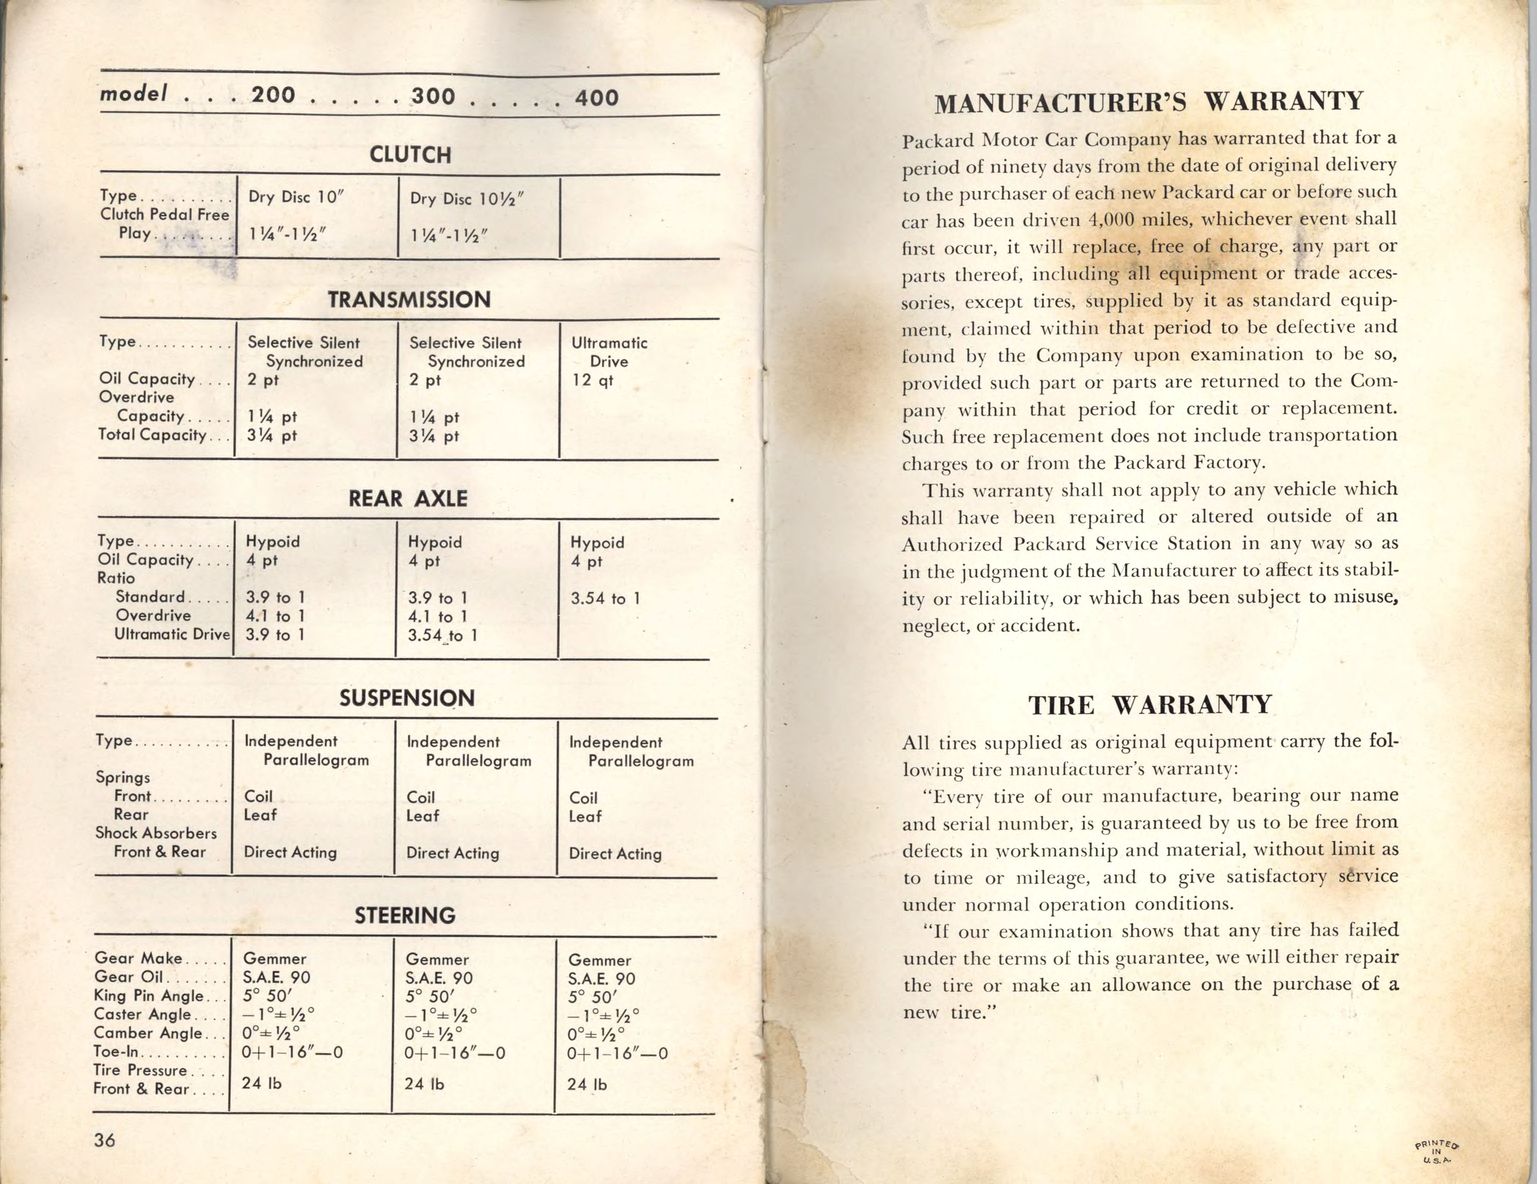 1951_Packard_Manual-36-37